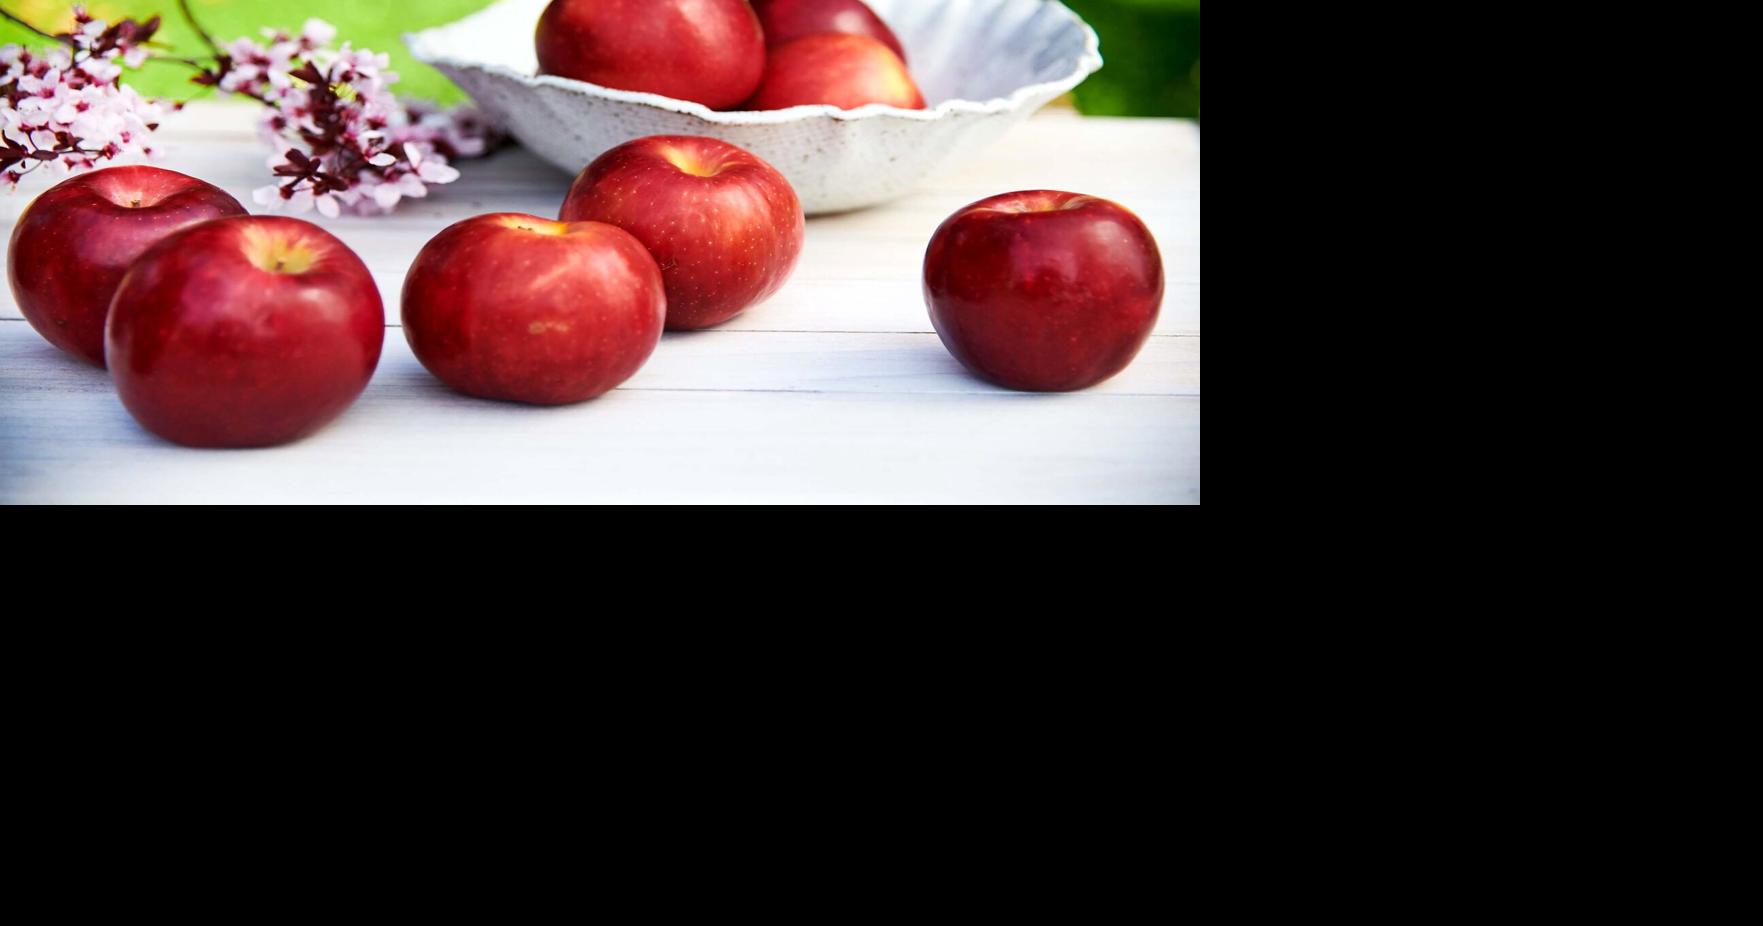 2021 crop of WSU's Cosmic Crisp apples will hit stores early - Fruit  Growers News